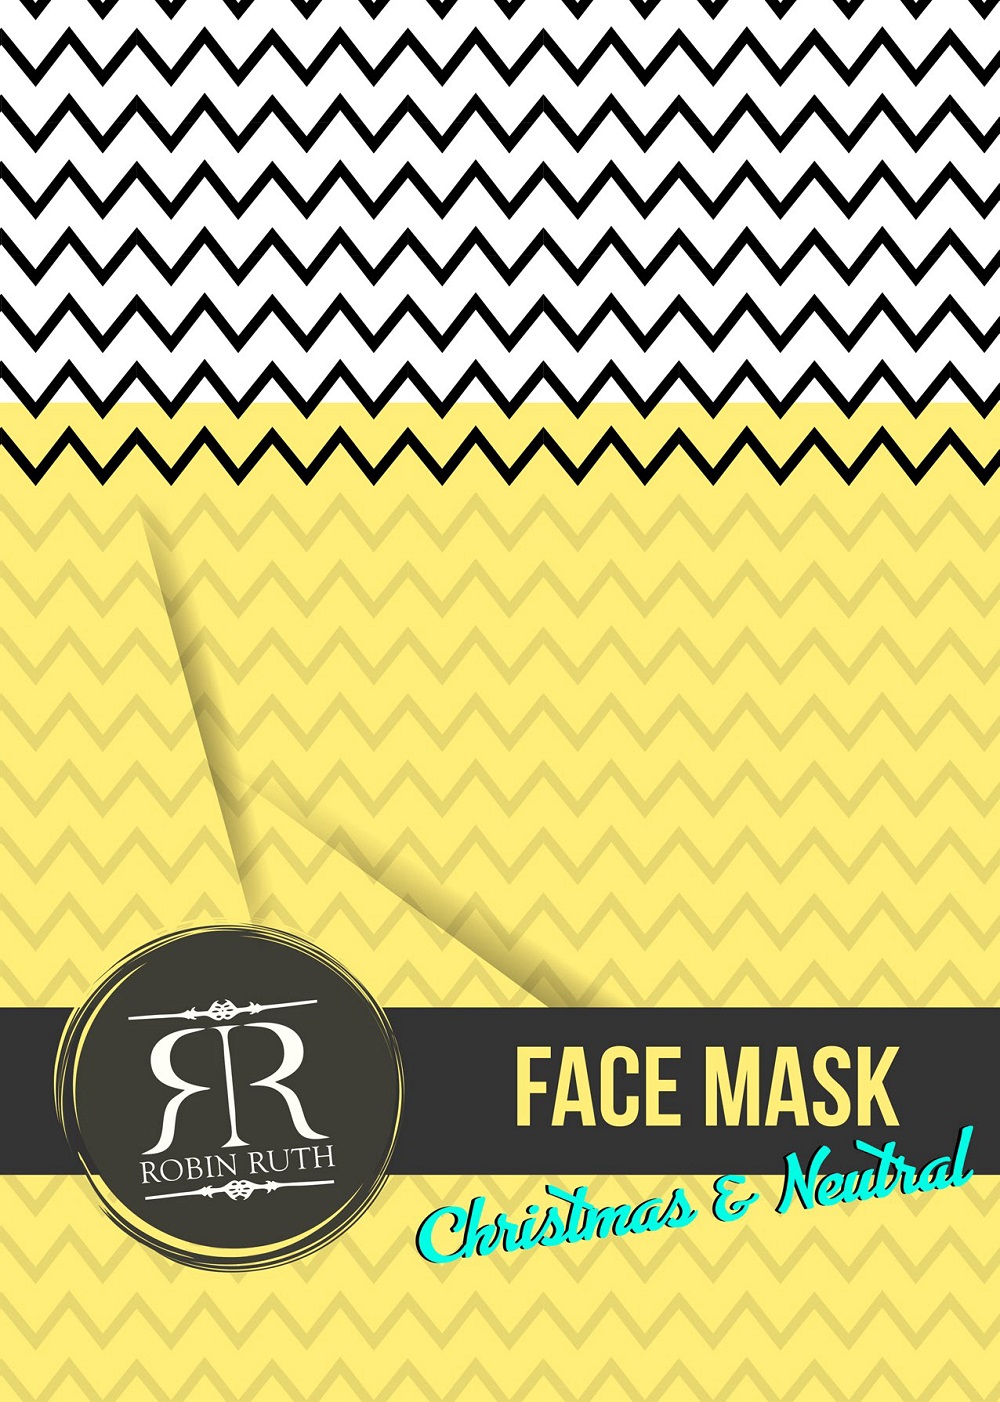 robin ruth face mask christmas logo